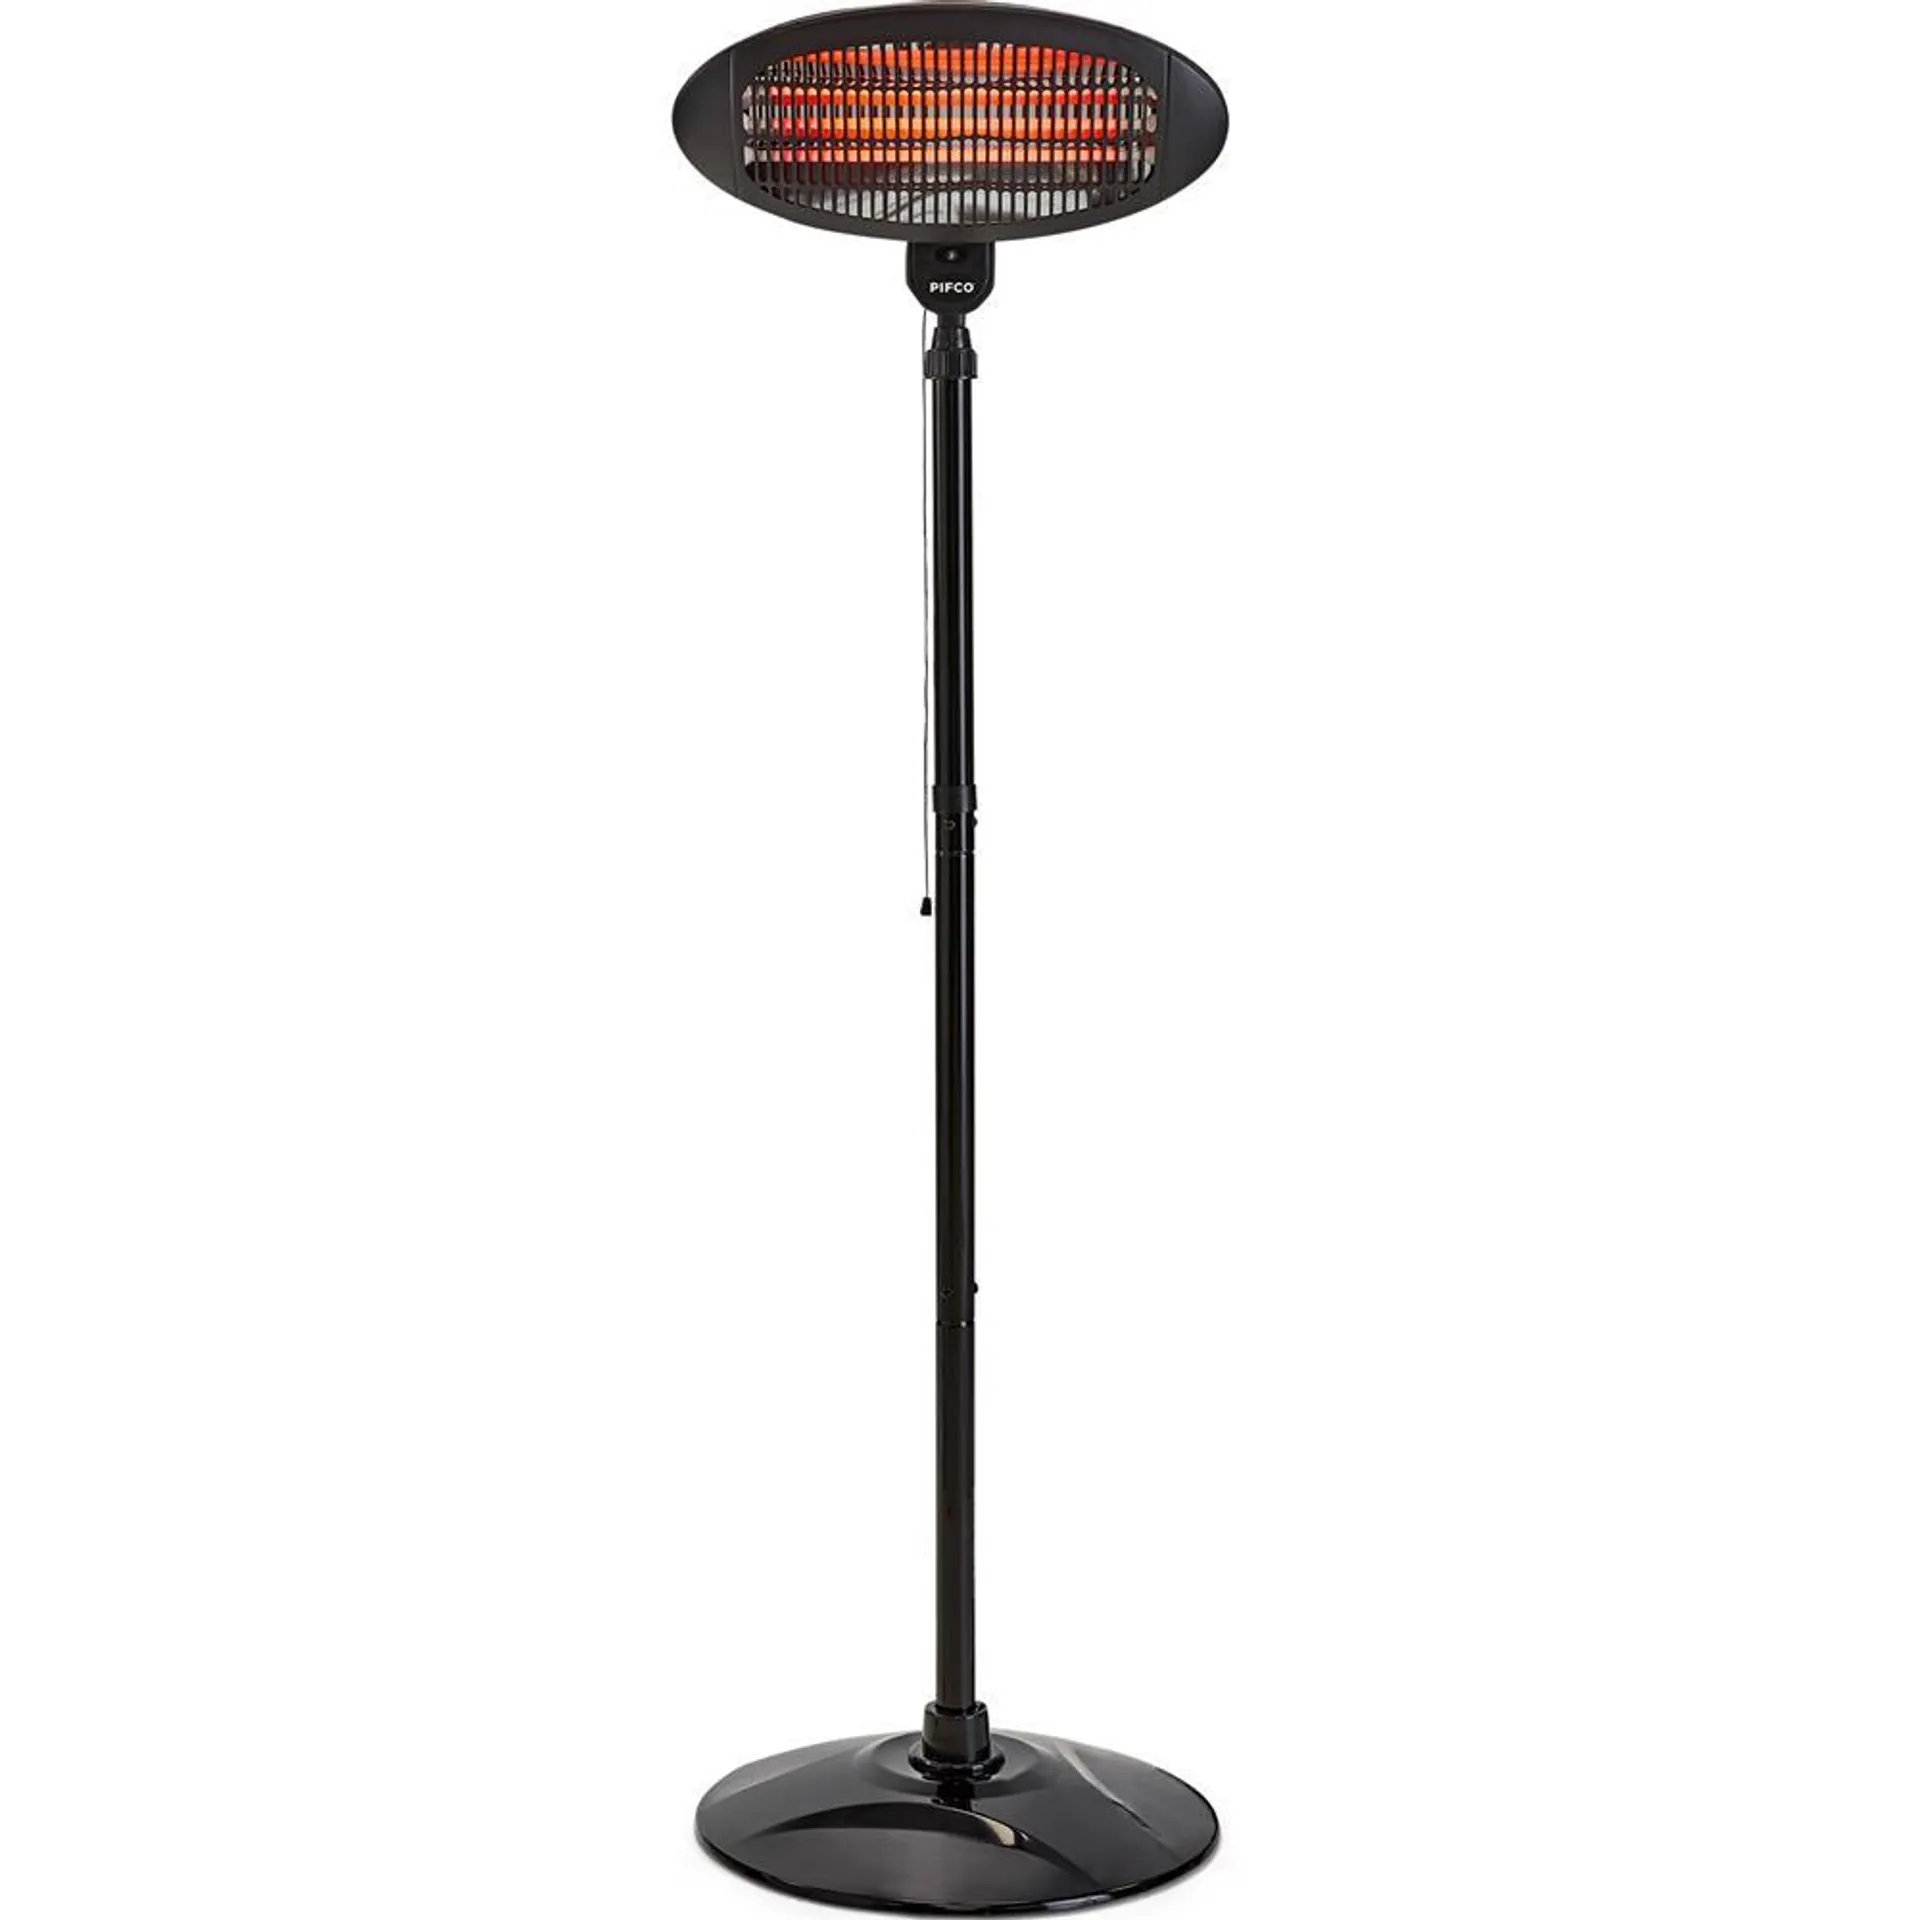 Pifco: 2000w Outdoor Patio Heater - Black